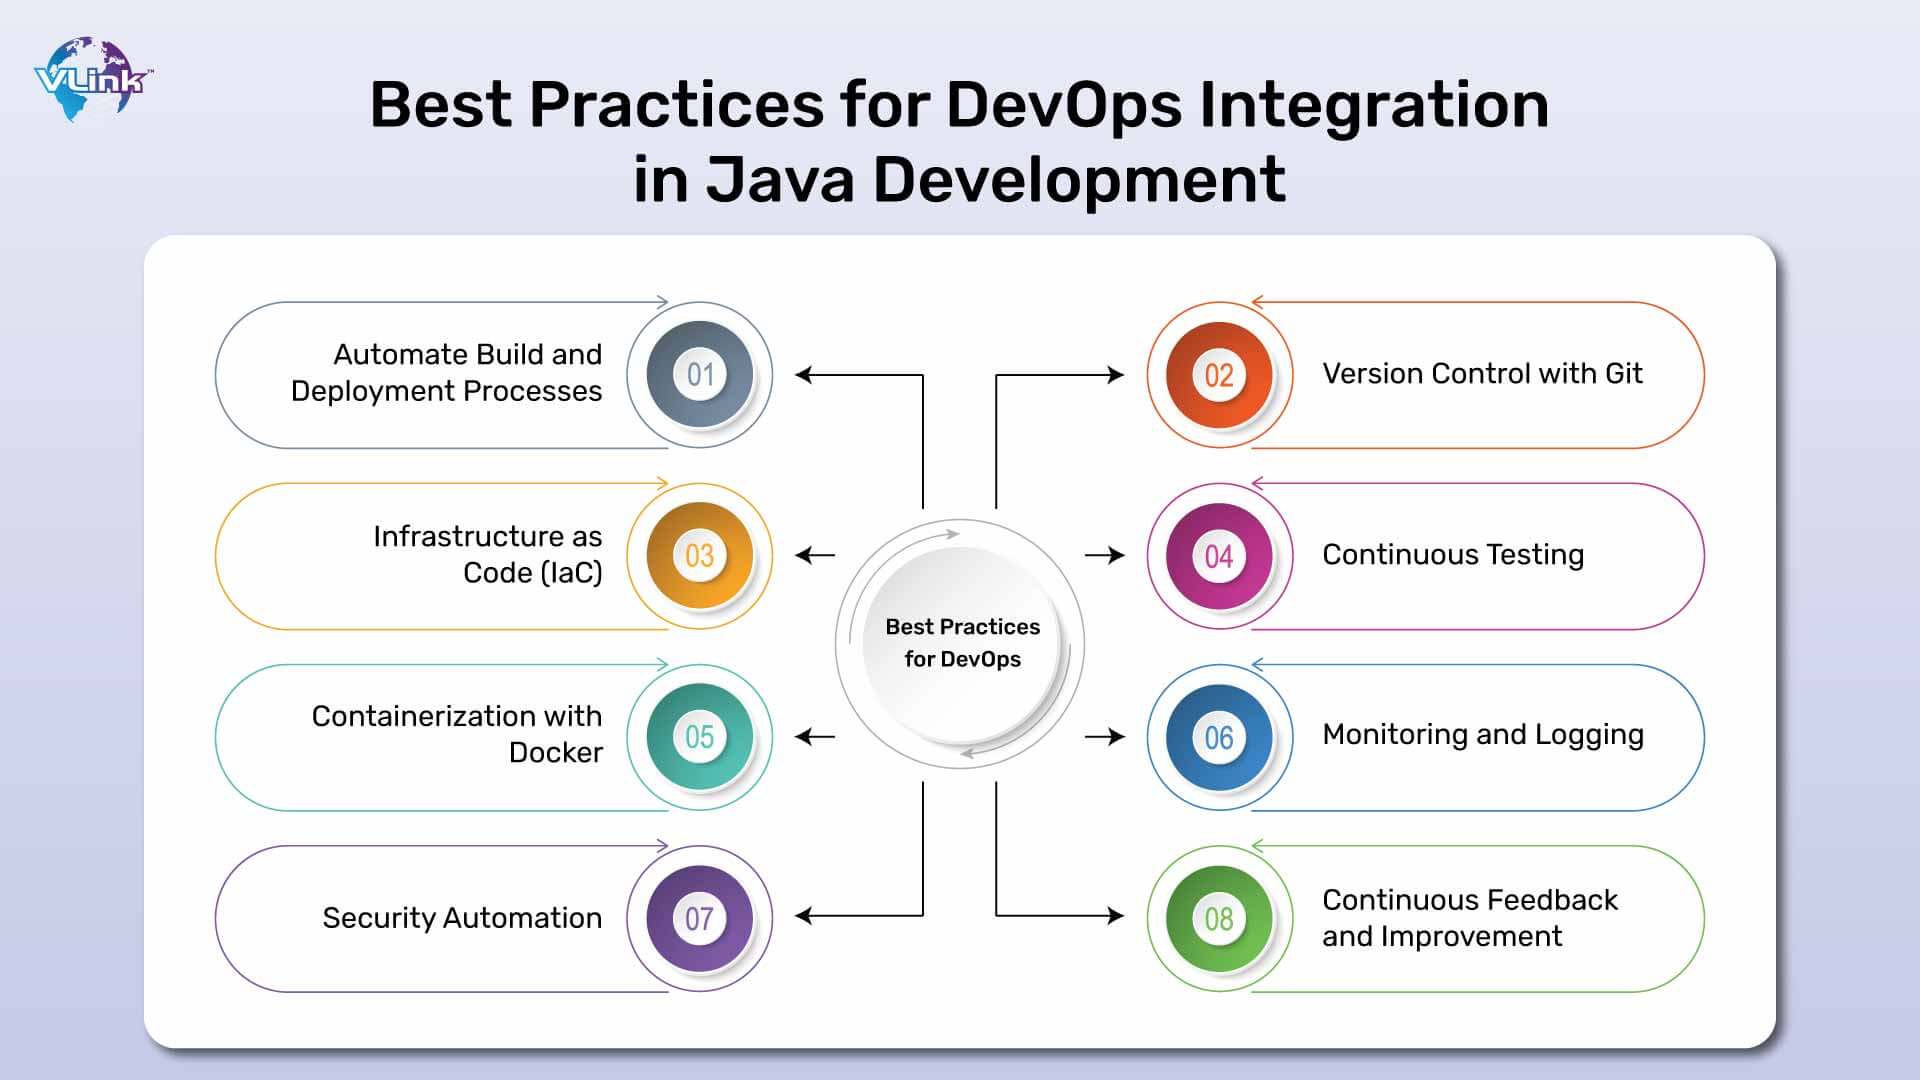 Best Practices for Seamless DevOps Integration in Java Development